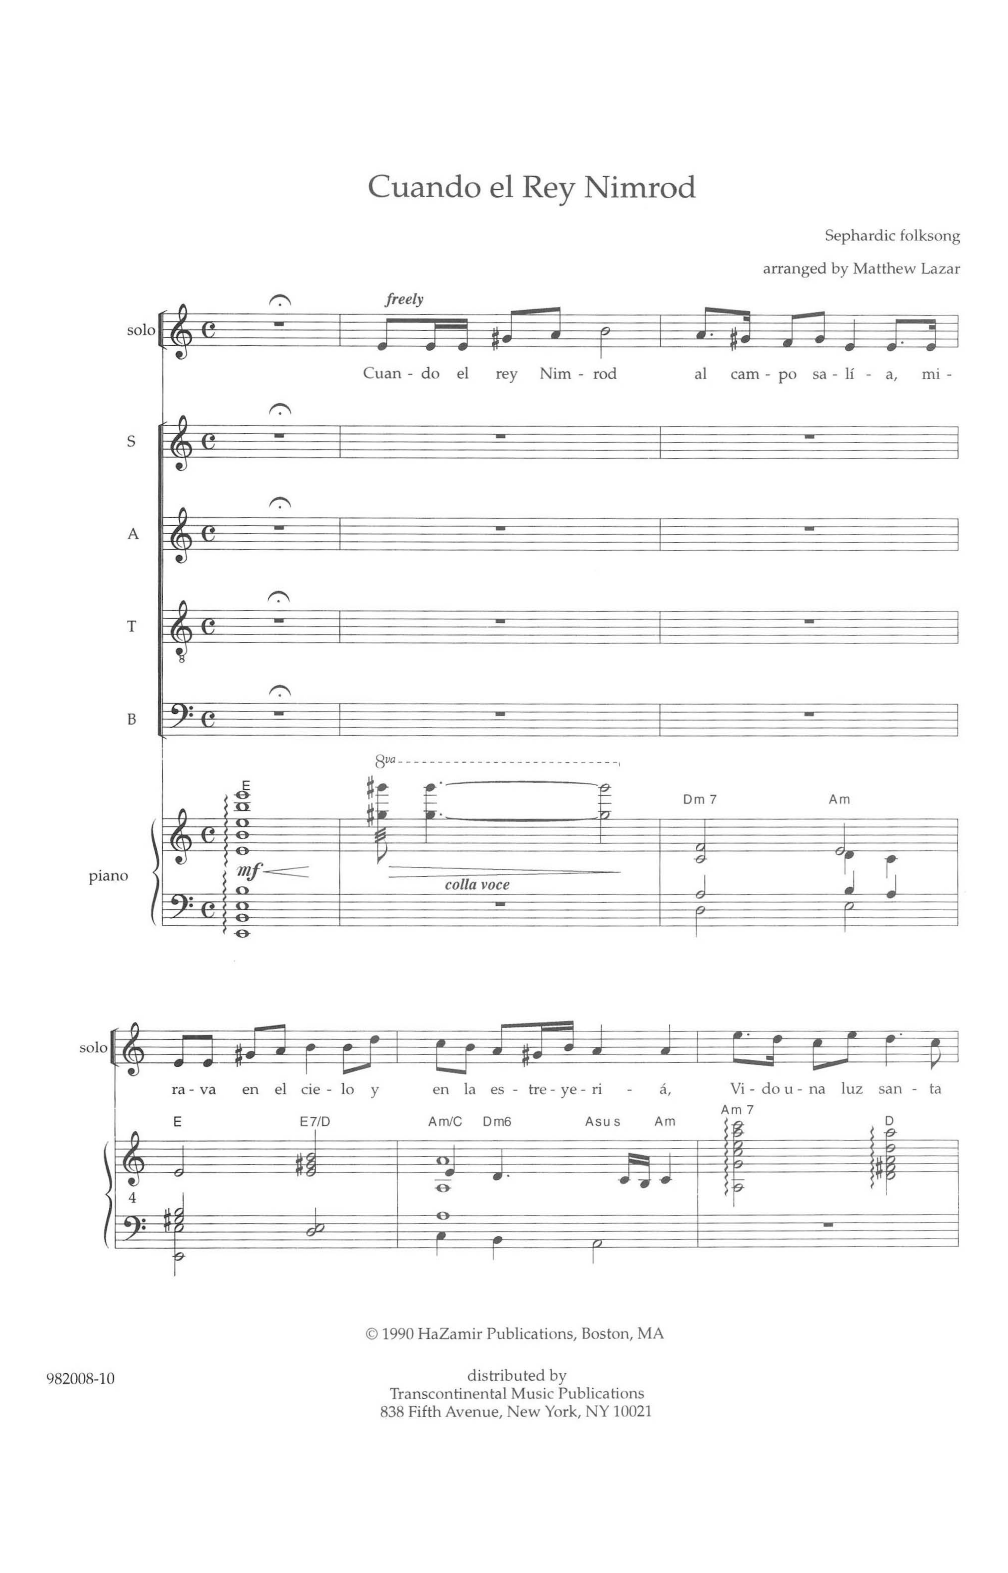 Matthew Lazar Cuando el Rey Nimrod Sheet Music Notes & Chords for Choral - Download or Print PDF